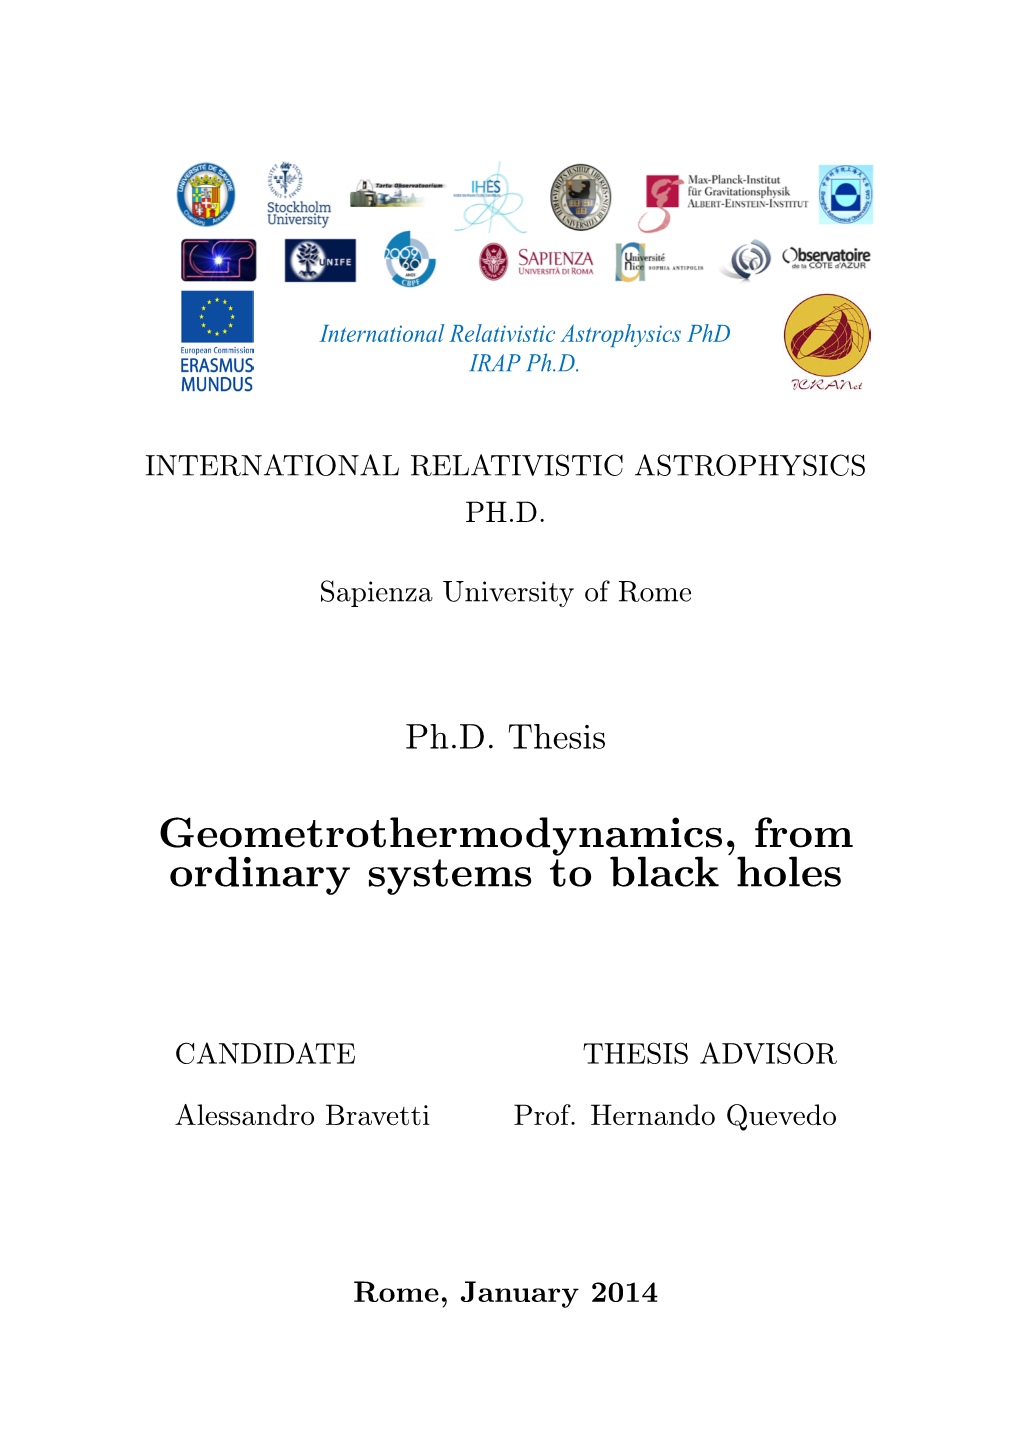 Geometrothermodynamics, from Ordinary Systems to Black Holes